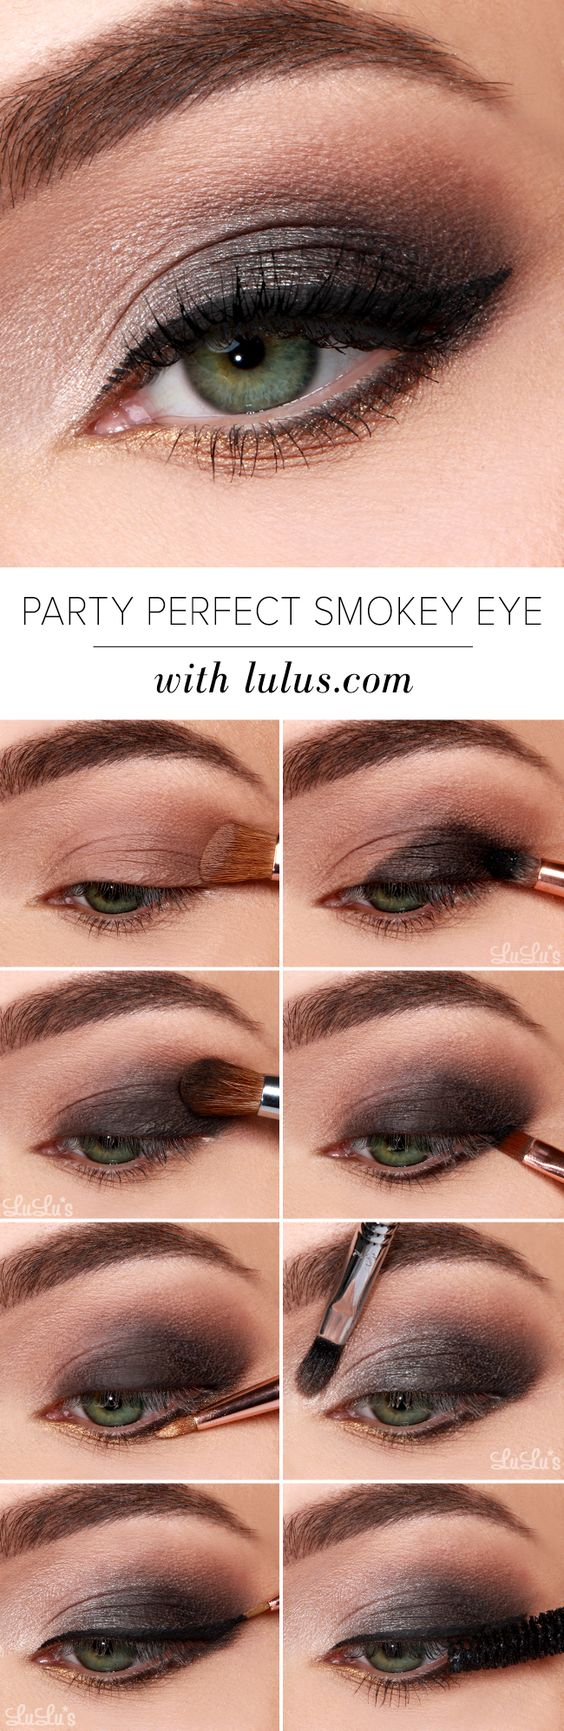 How To Create Smokey Eye Makeup 40 Hottest Smokey Eye Makeup Ideas 2019 Smokey Eye Tutorials For